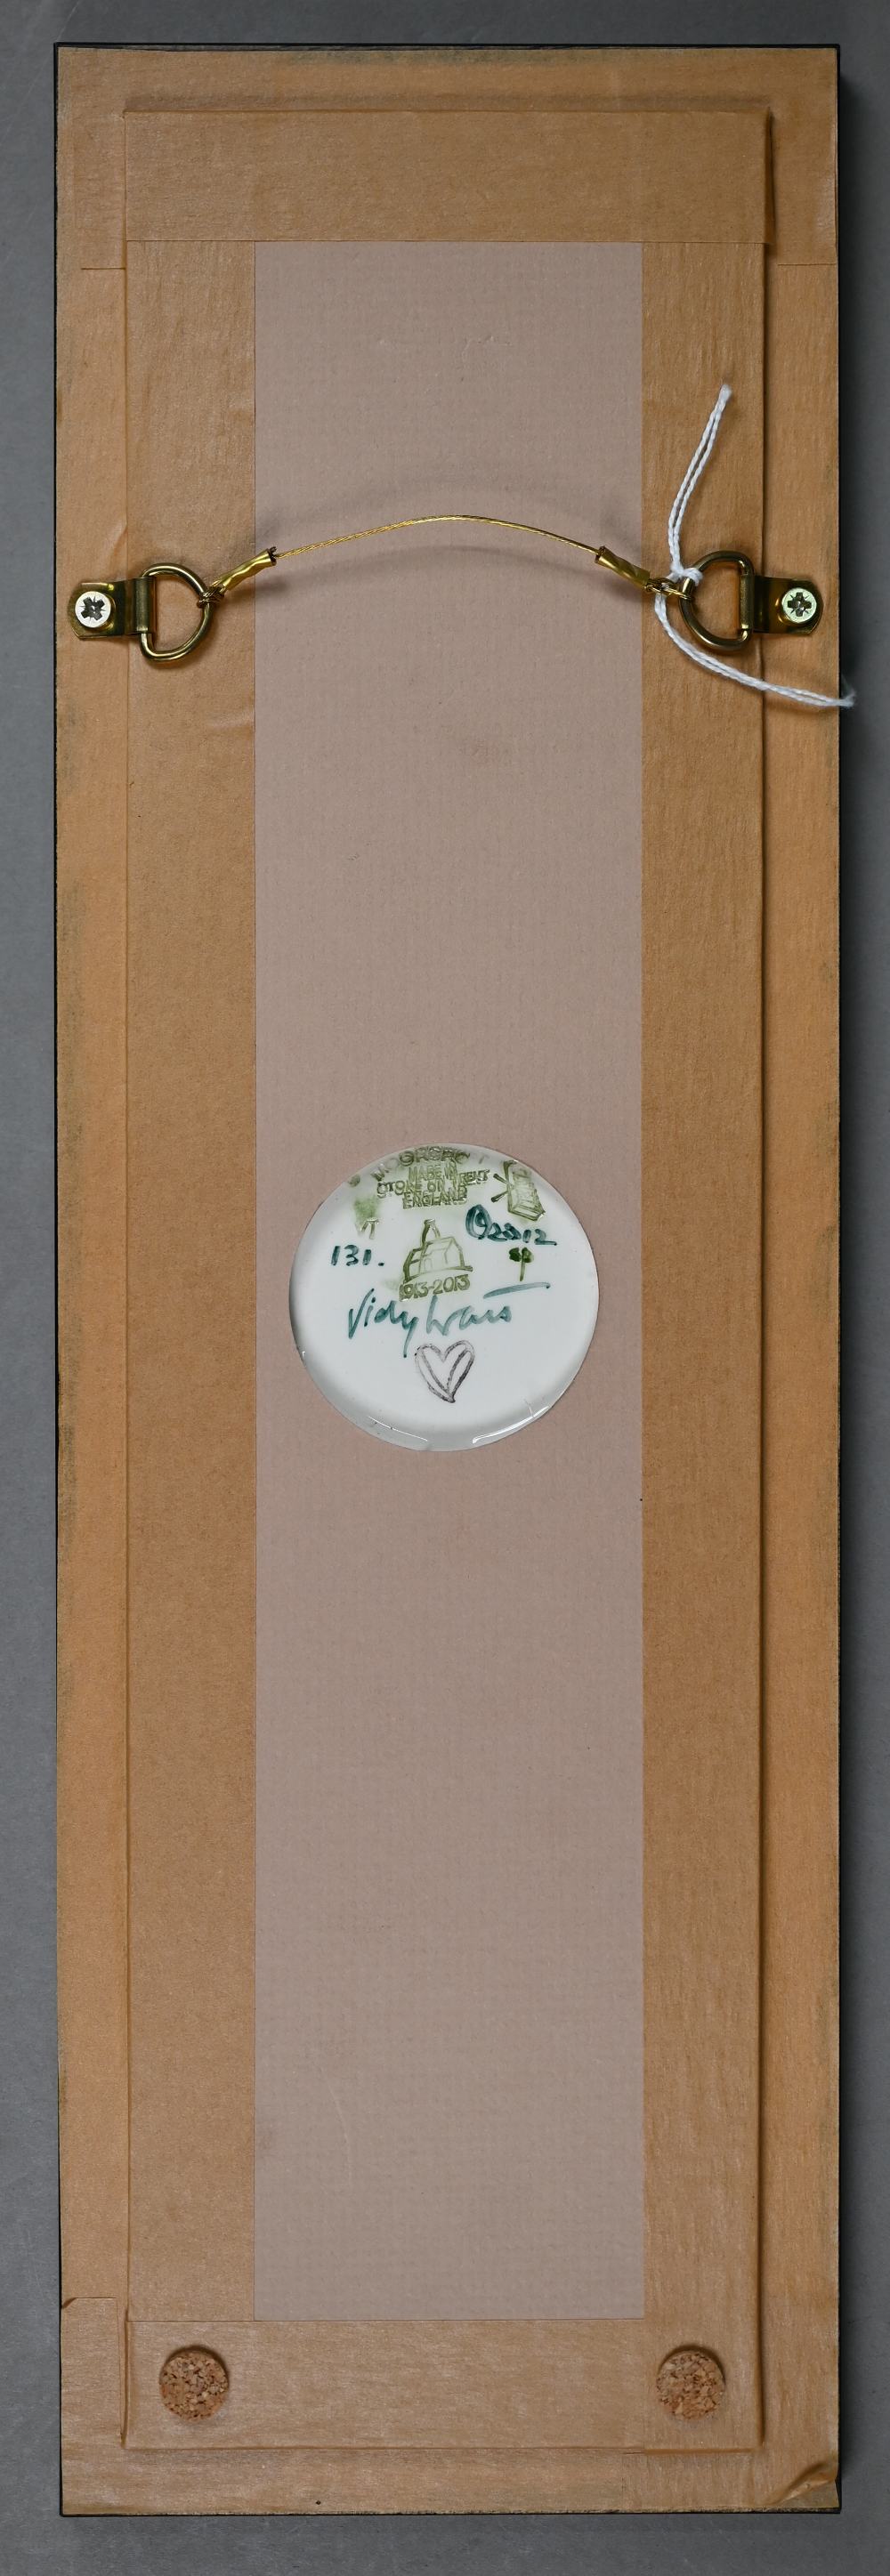 A boxed Moorcroft 'Waxcup Wonders' plaque by Vicky Lovatt 2012, 40 x 9.5 cm, in oak frame - Image 3 of 4